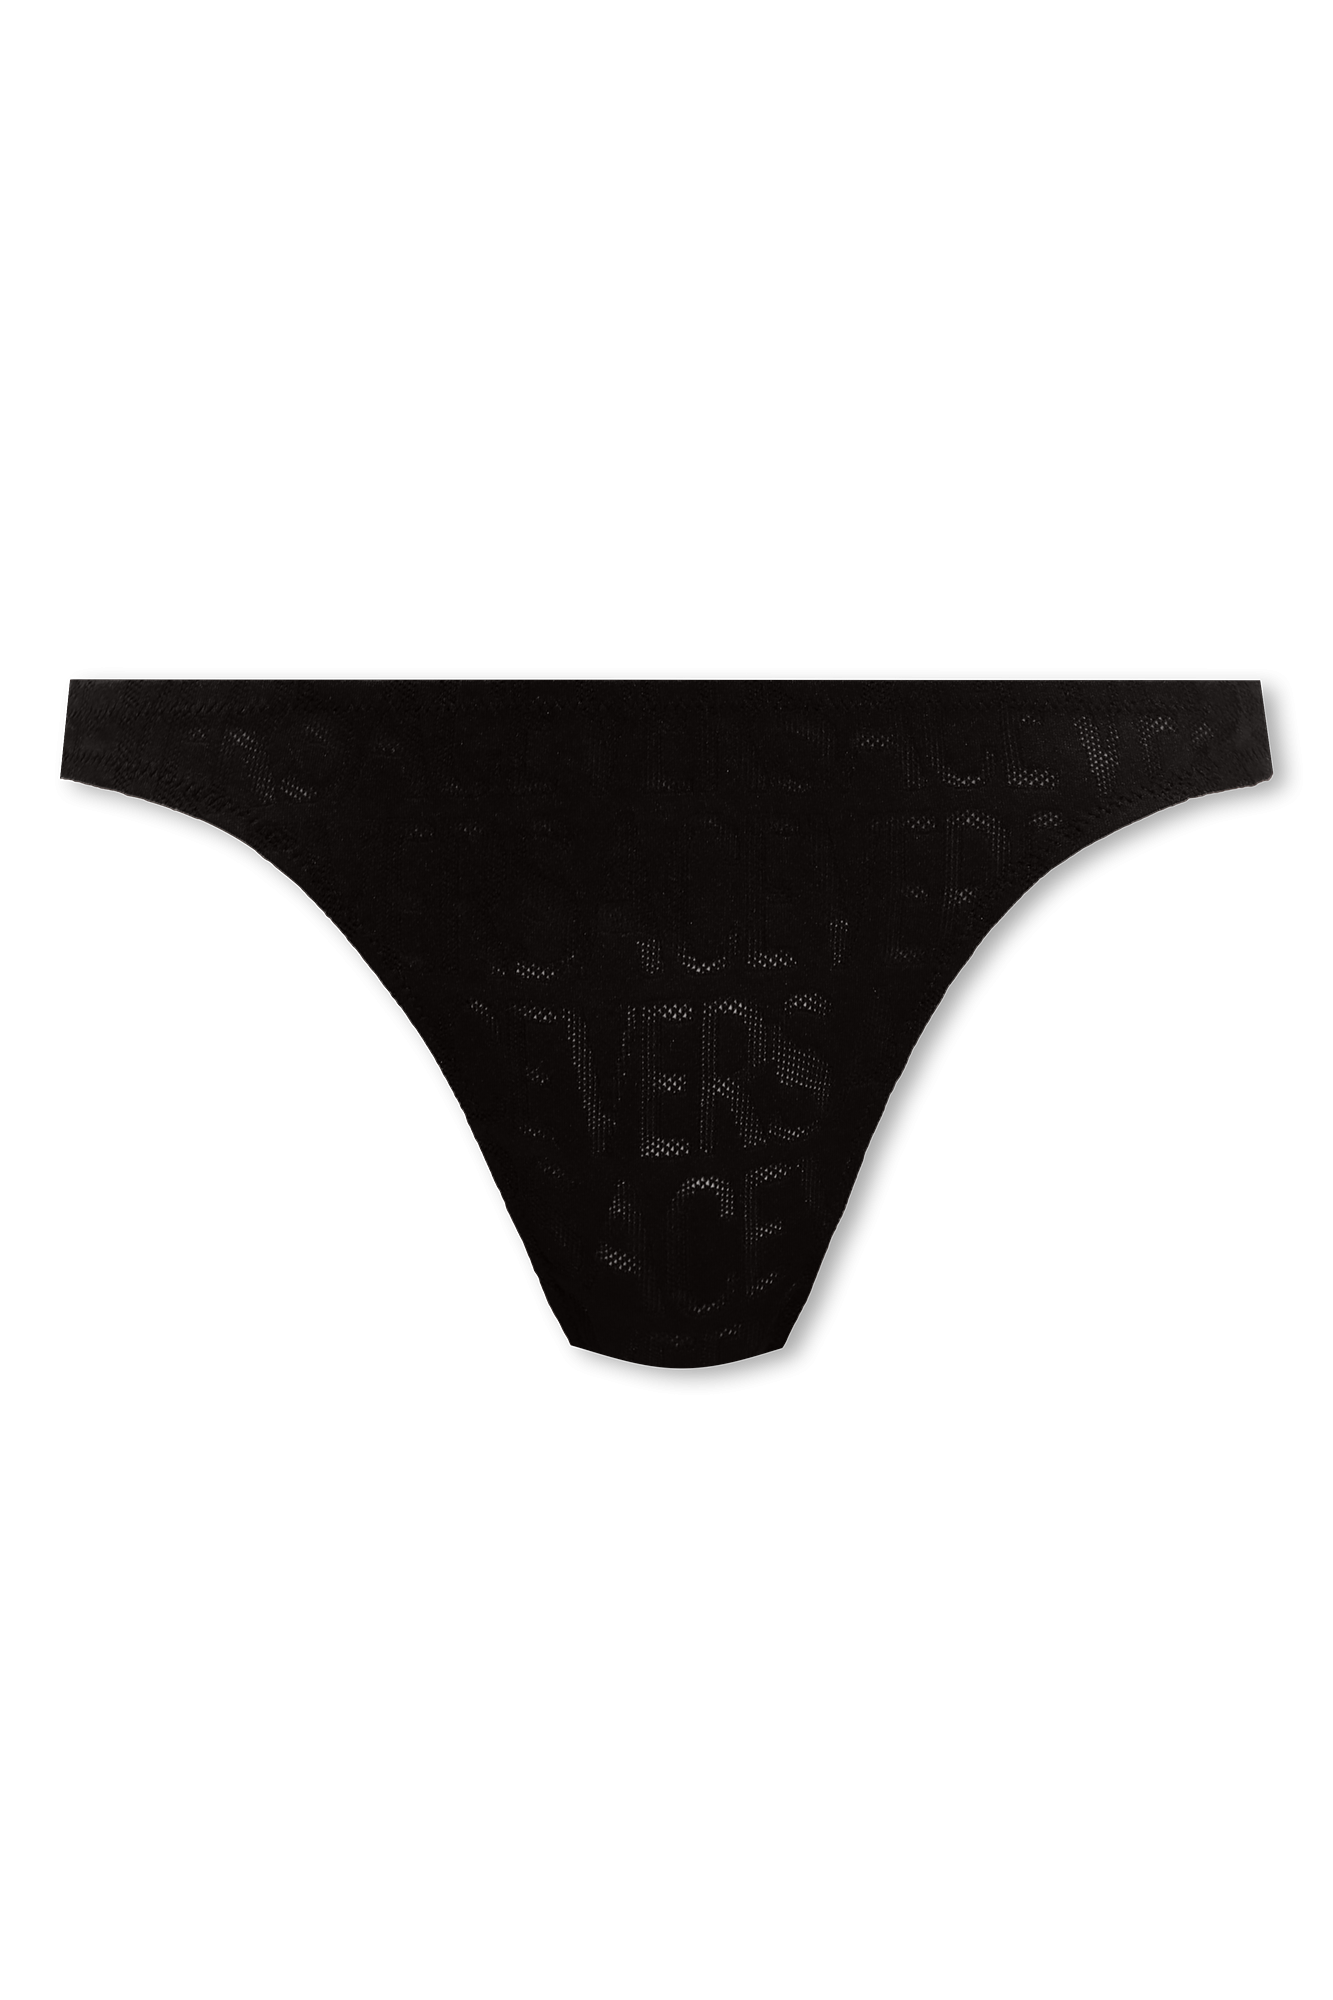 Black Thong with logo Versace - Vitkac Canada